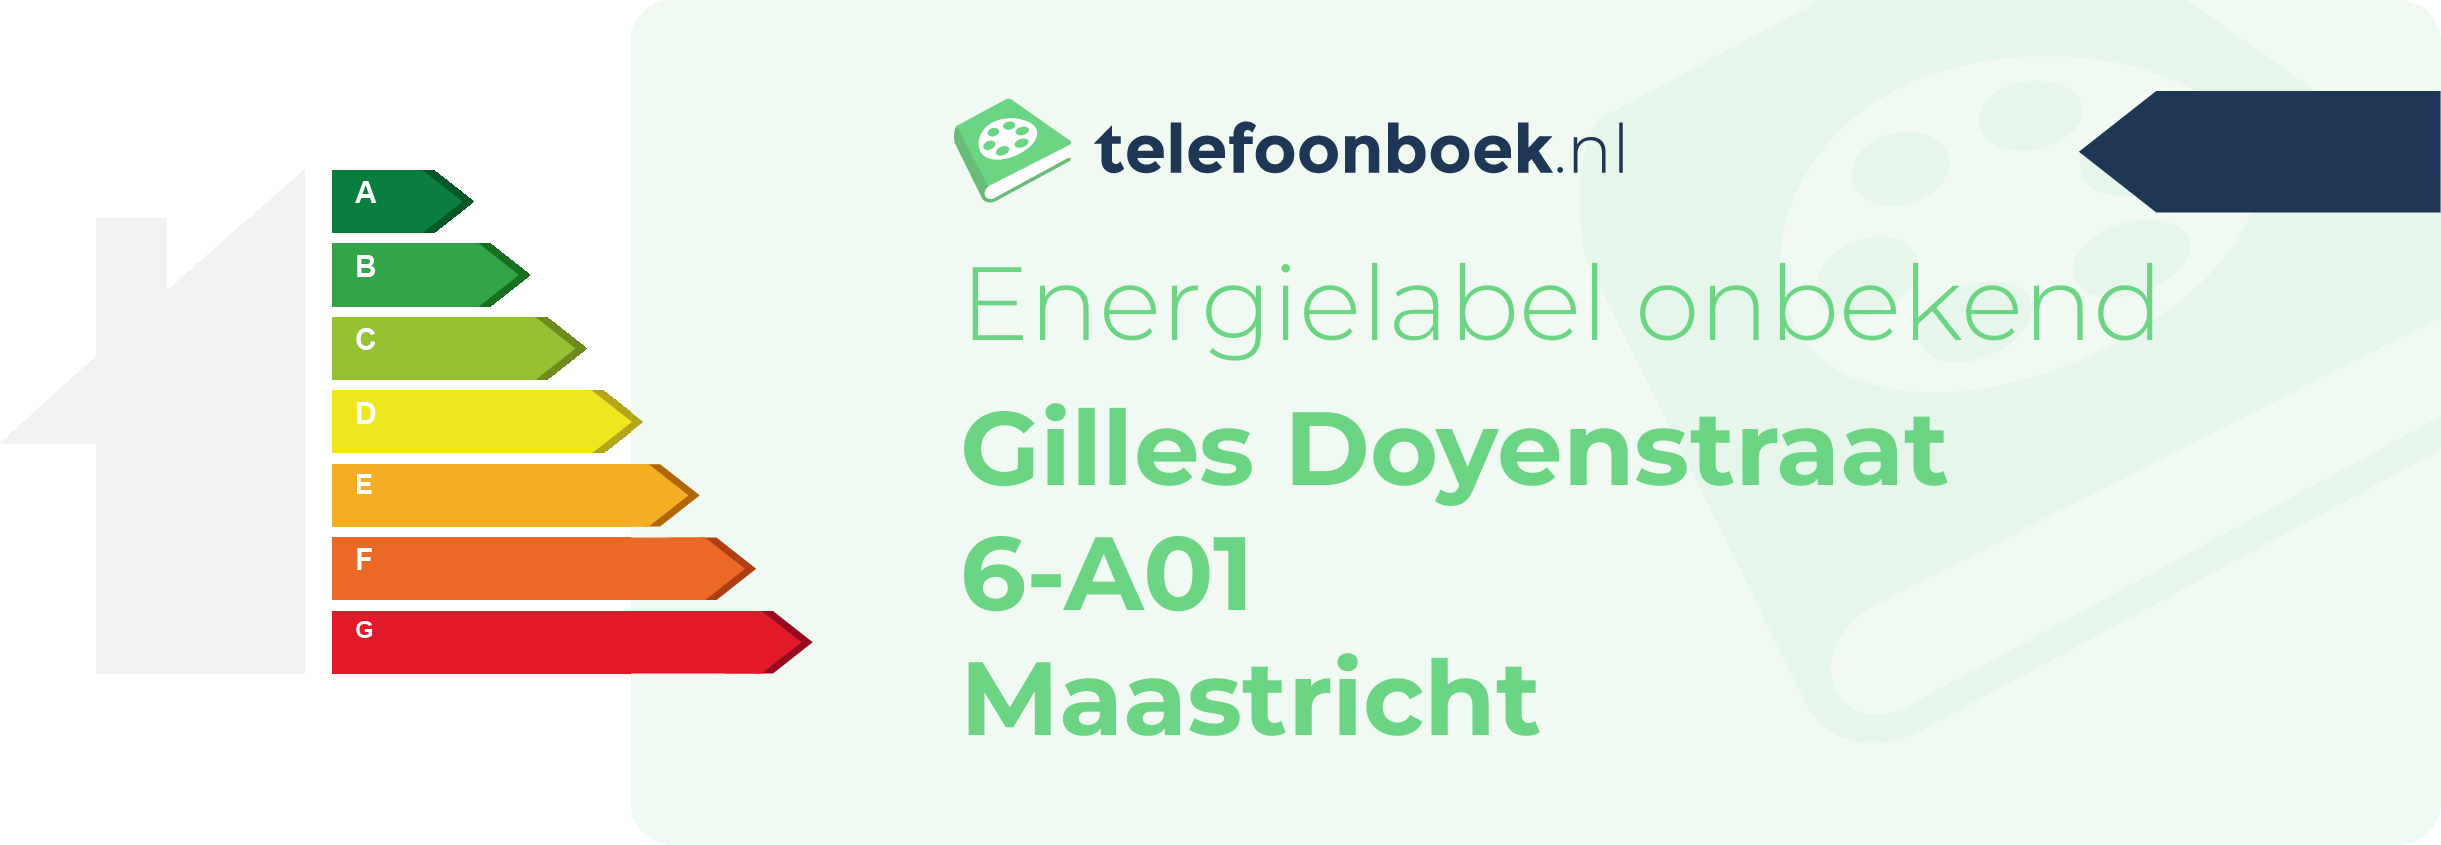 Energielabel Gilles Doyenstraat 6-A01 Maastricht